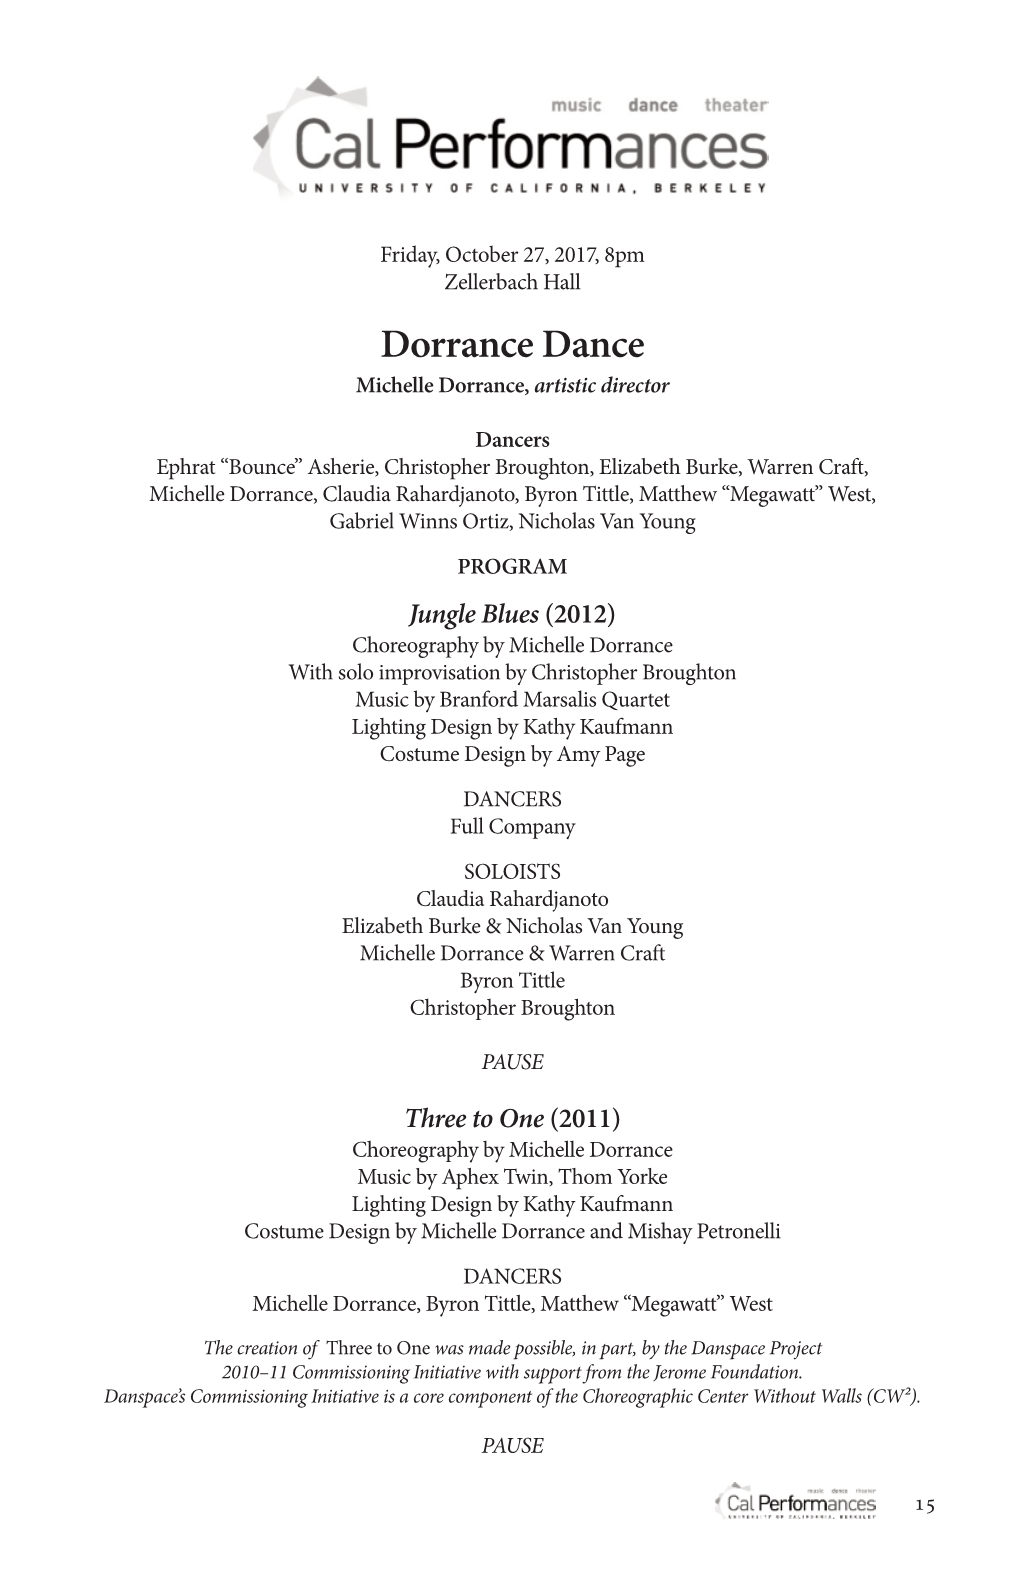 Dorrance Dance Michelle Dorrance, Artistic Director